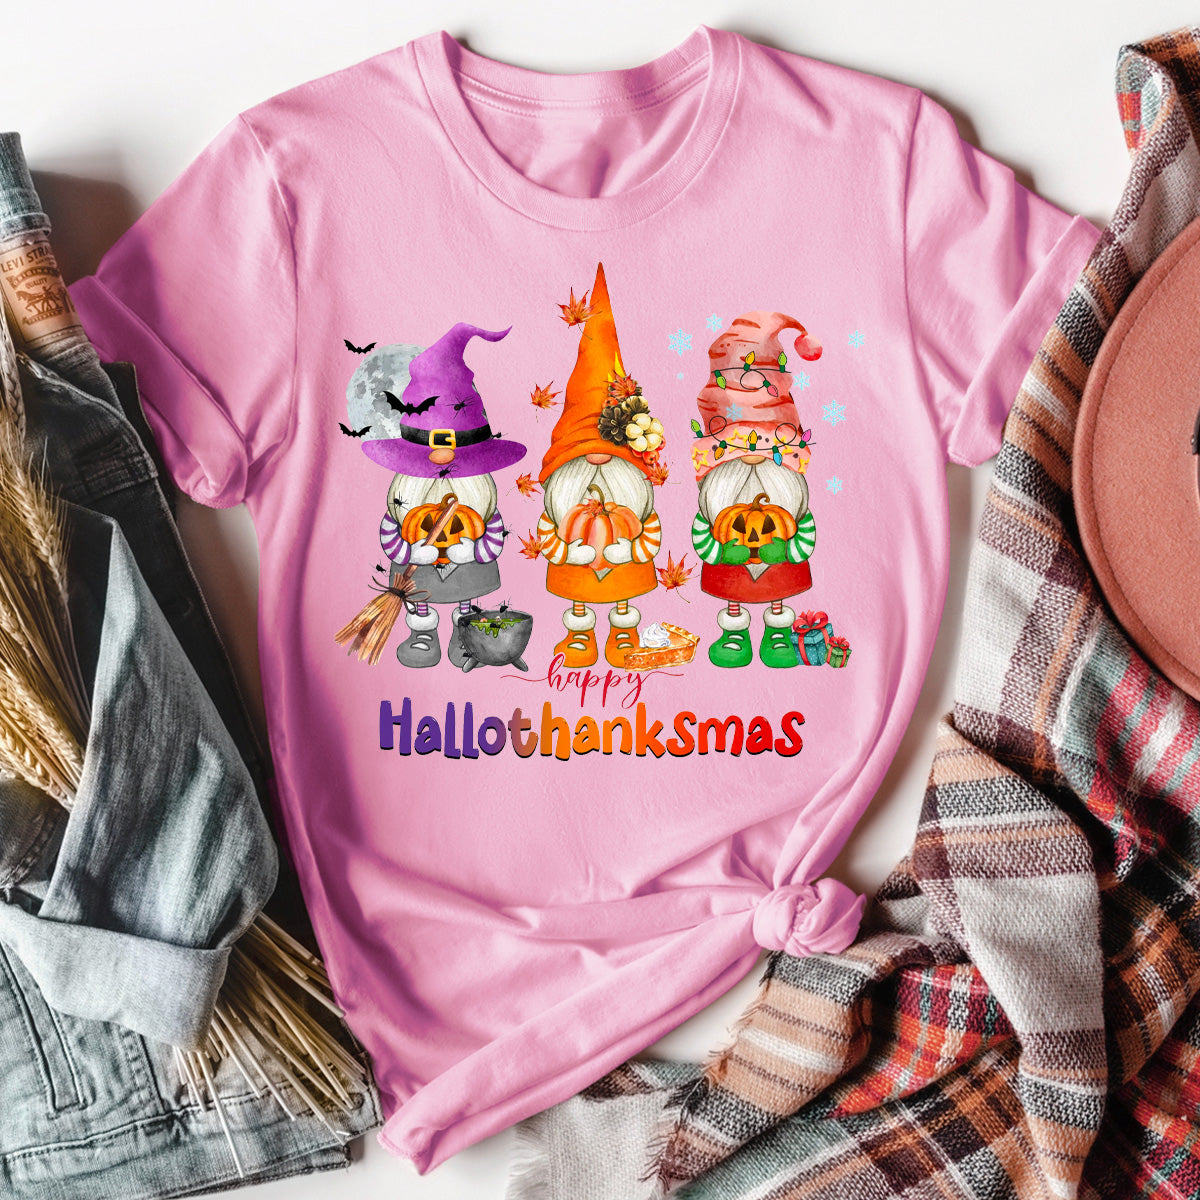 Happy HalloThanksMas Gnome T-Shirt